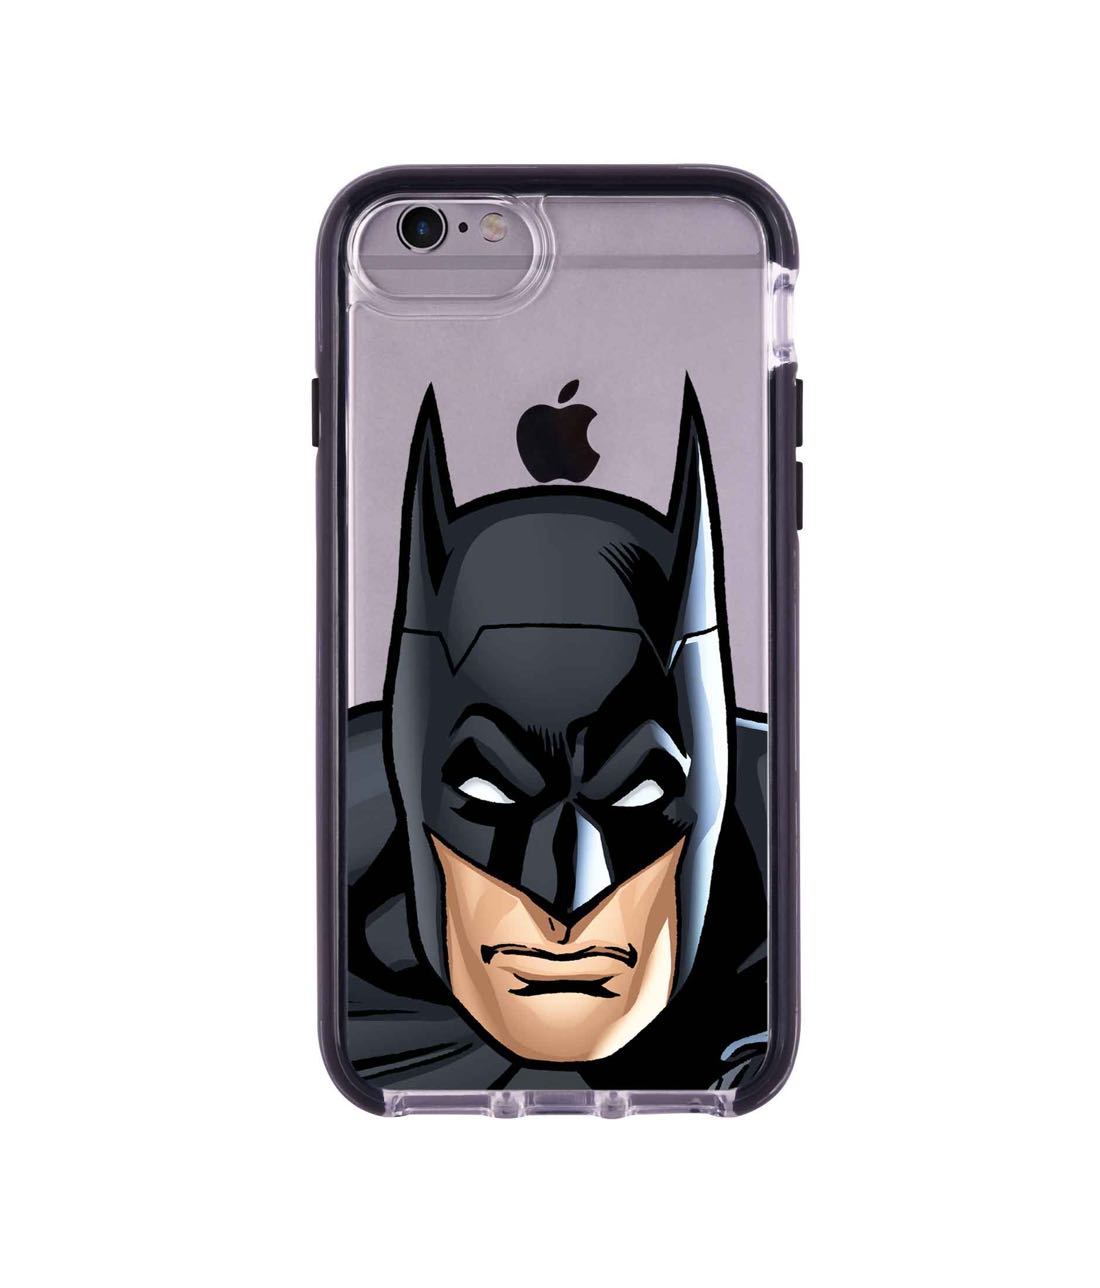 Fierce Batman - Extreme Phone Case for iPhone 6S Plus